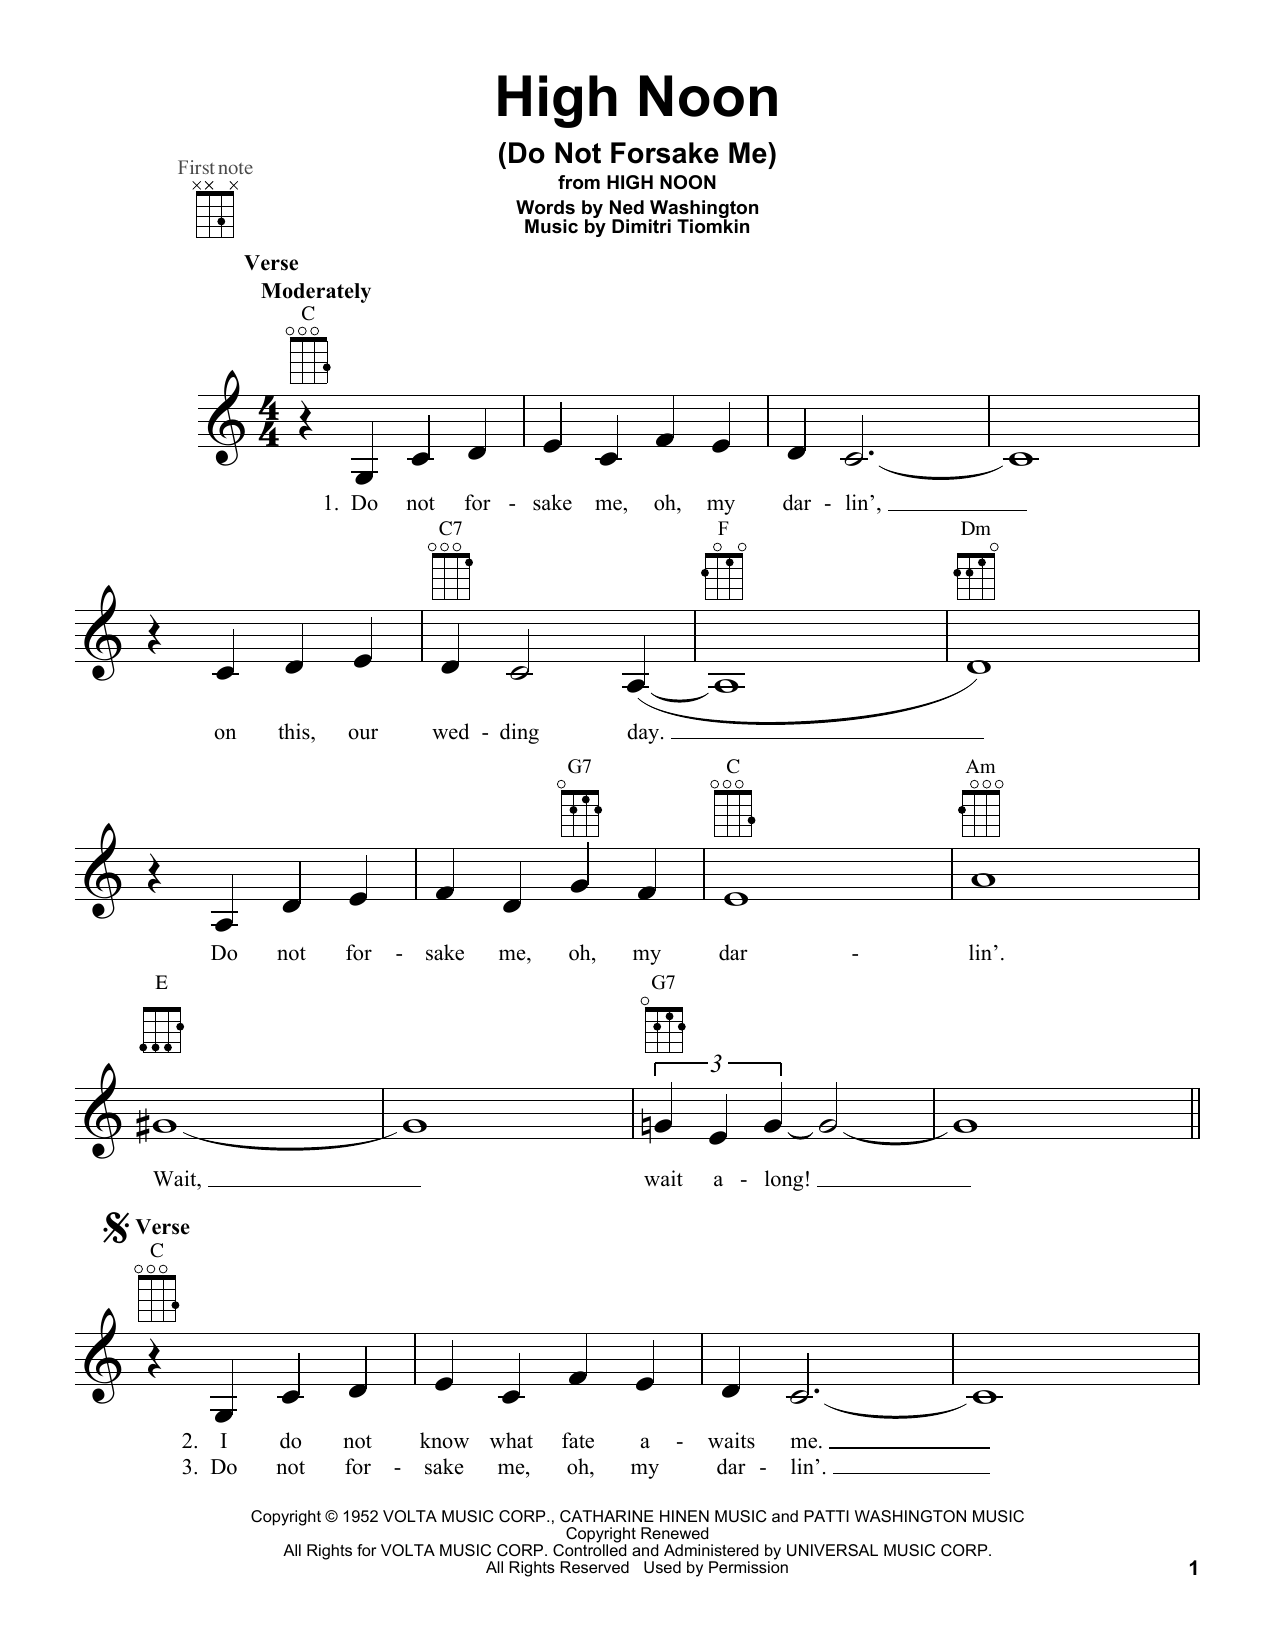 Ned Washington High Noon (Do Not Forsake Me) Sheet Music Notes & Chords for Melody Line, Lyrics & Chords - Download or Print PDF